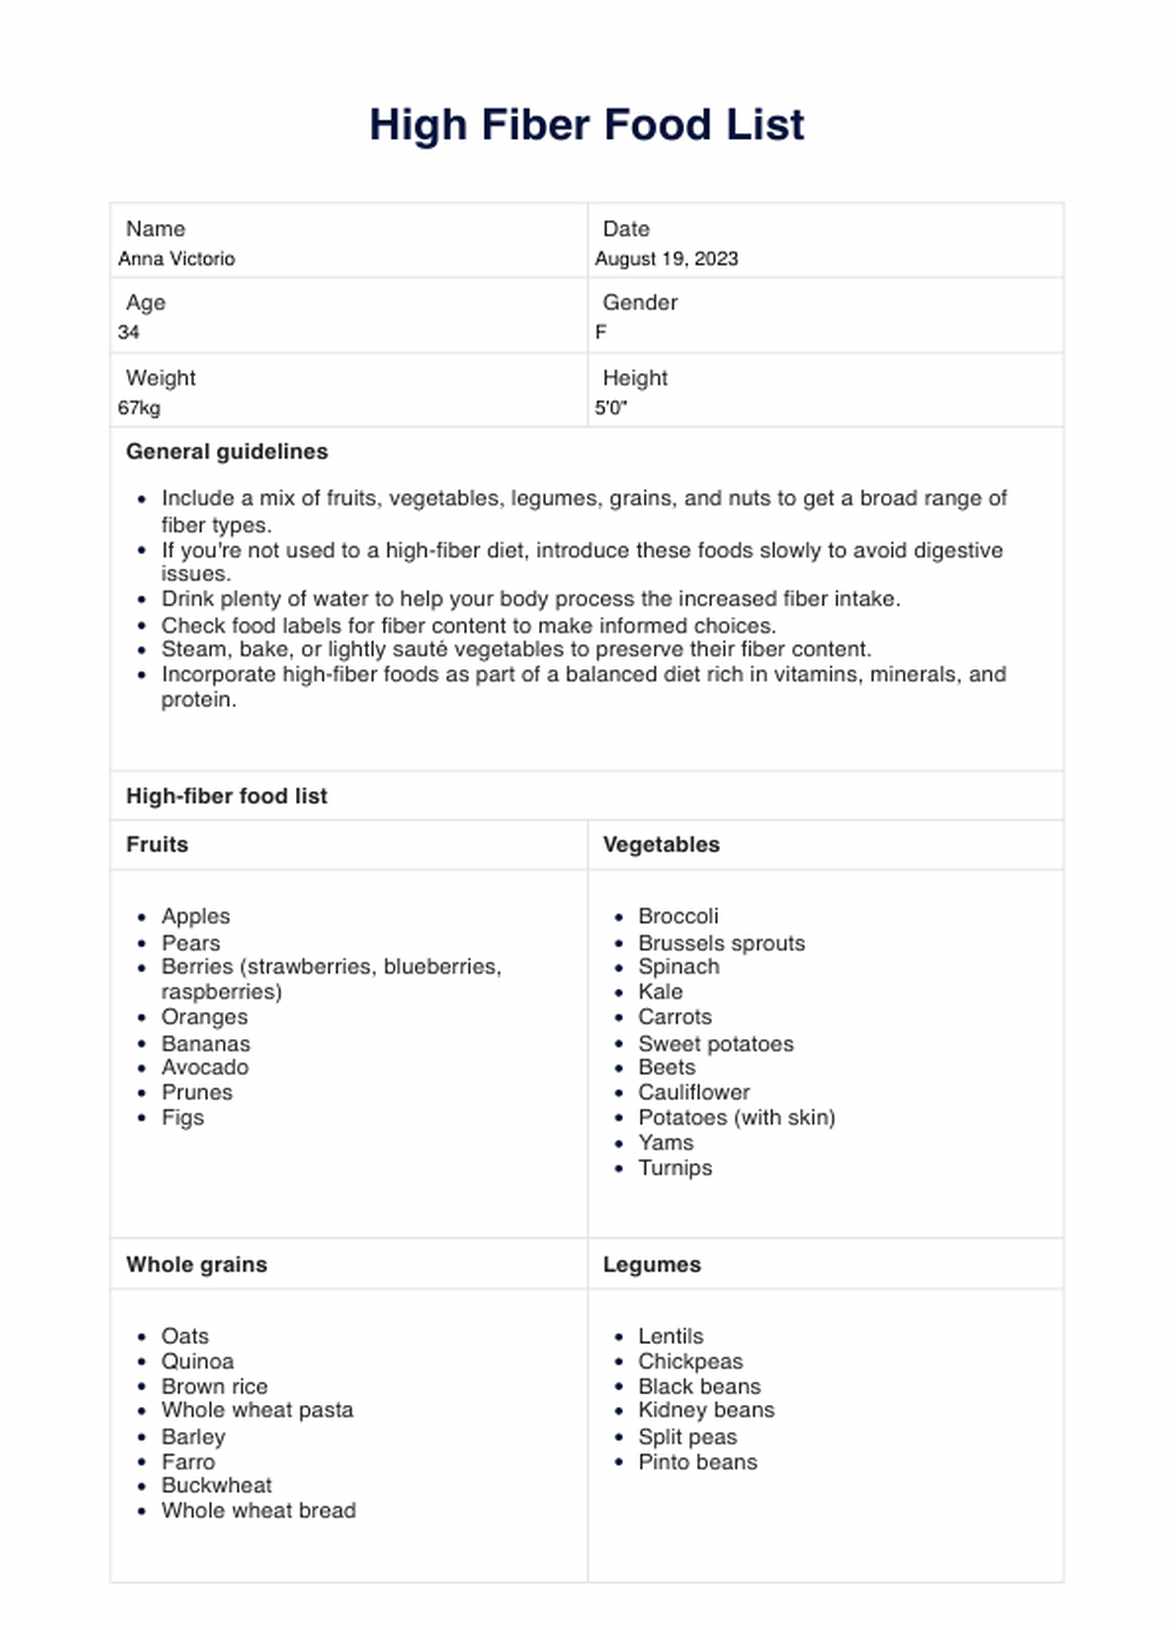 High Fiber Foods PDF Example